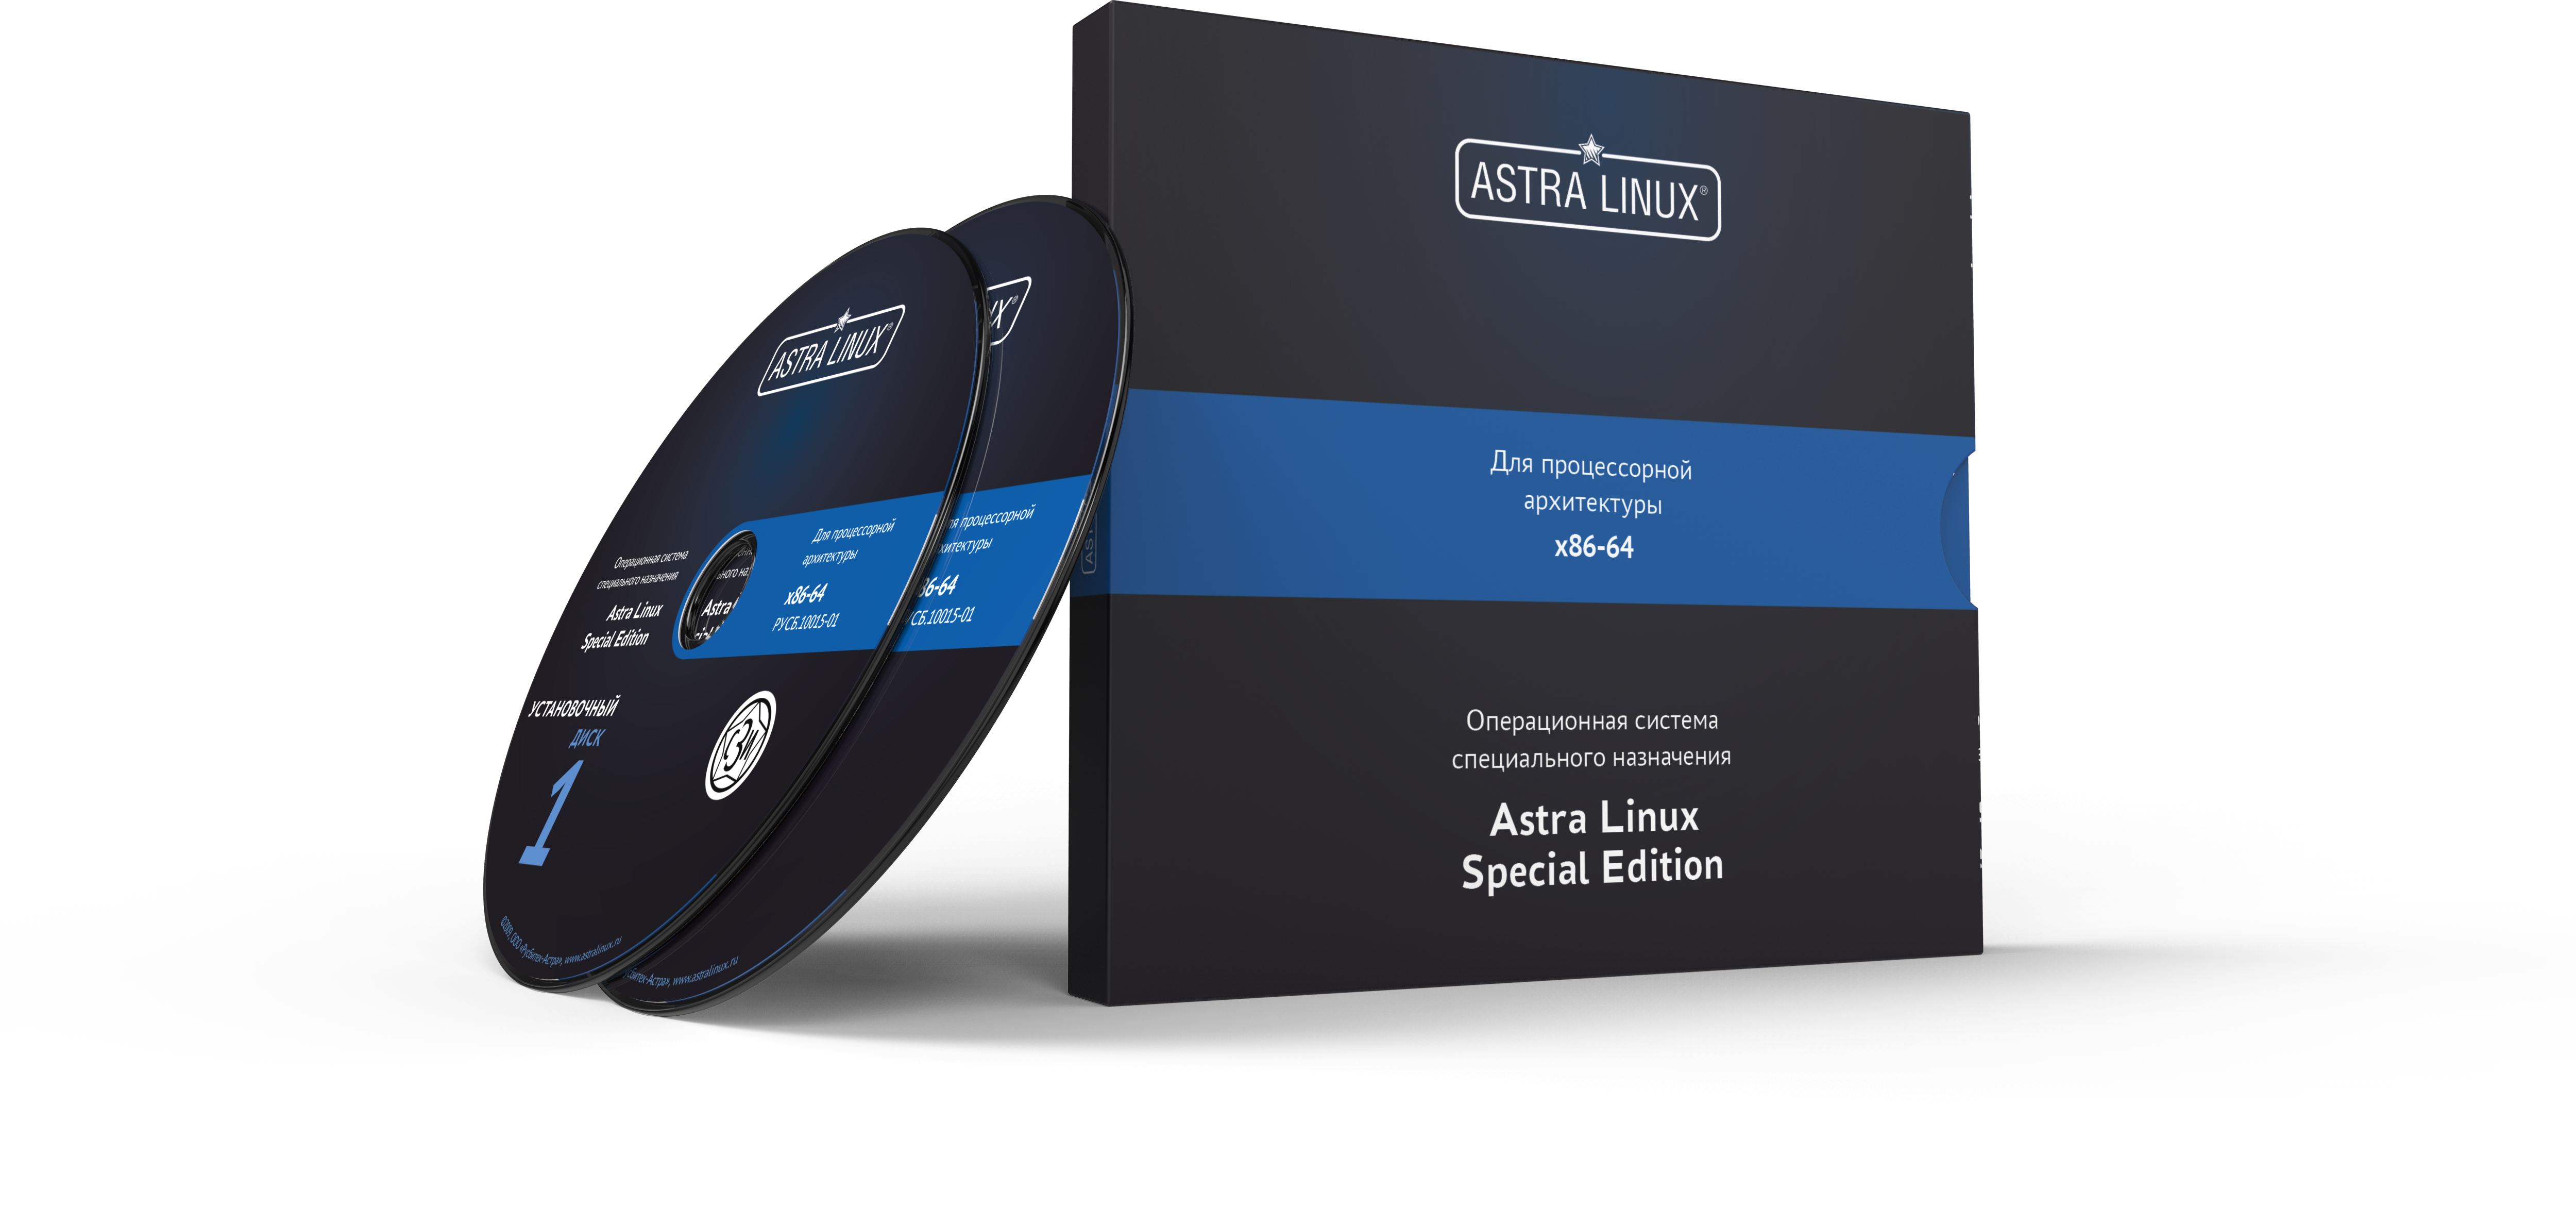 Astra Linux Special Edition 1.7 - Воронеж, BOX, без огр. срока, ТП "Стандарт" 36 мес.